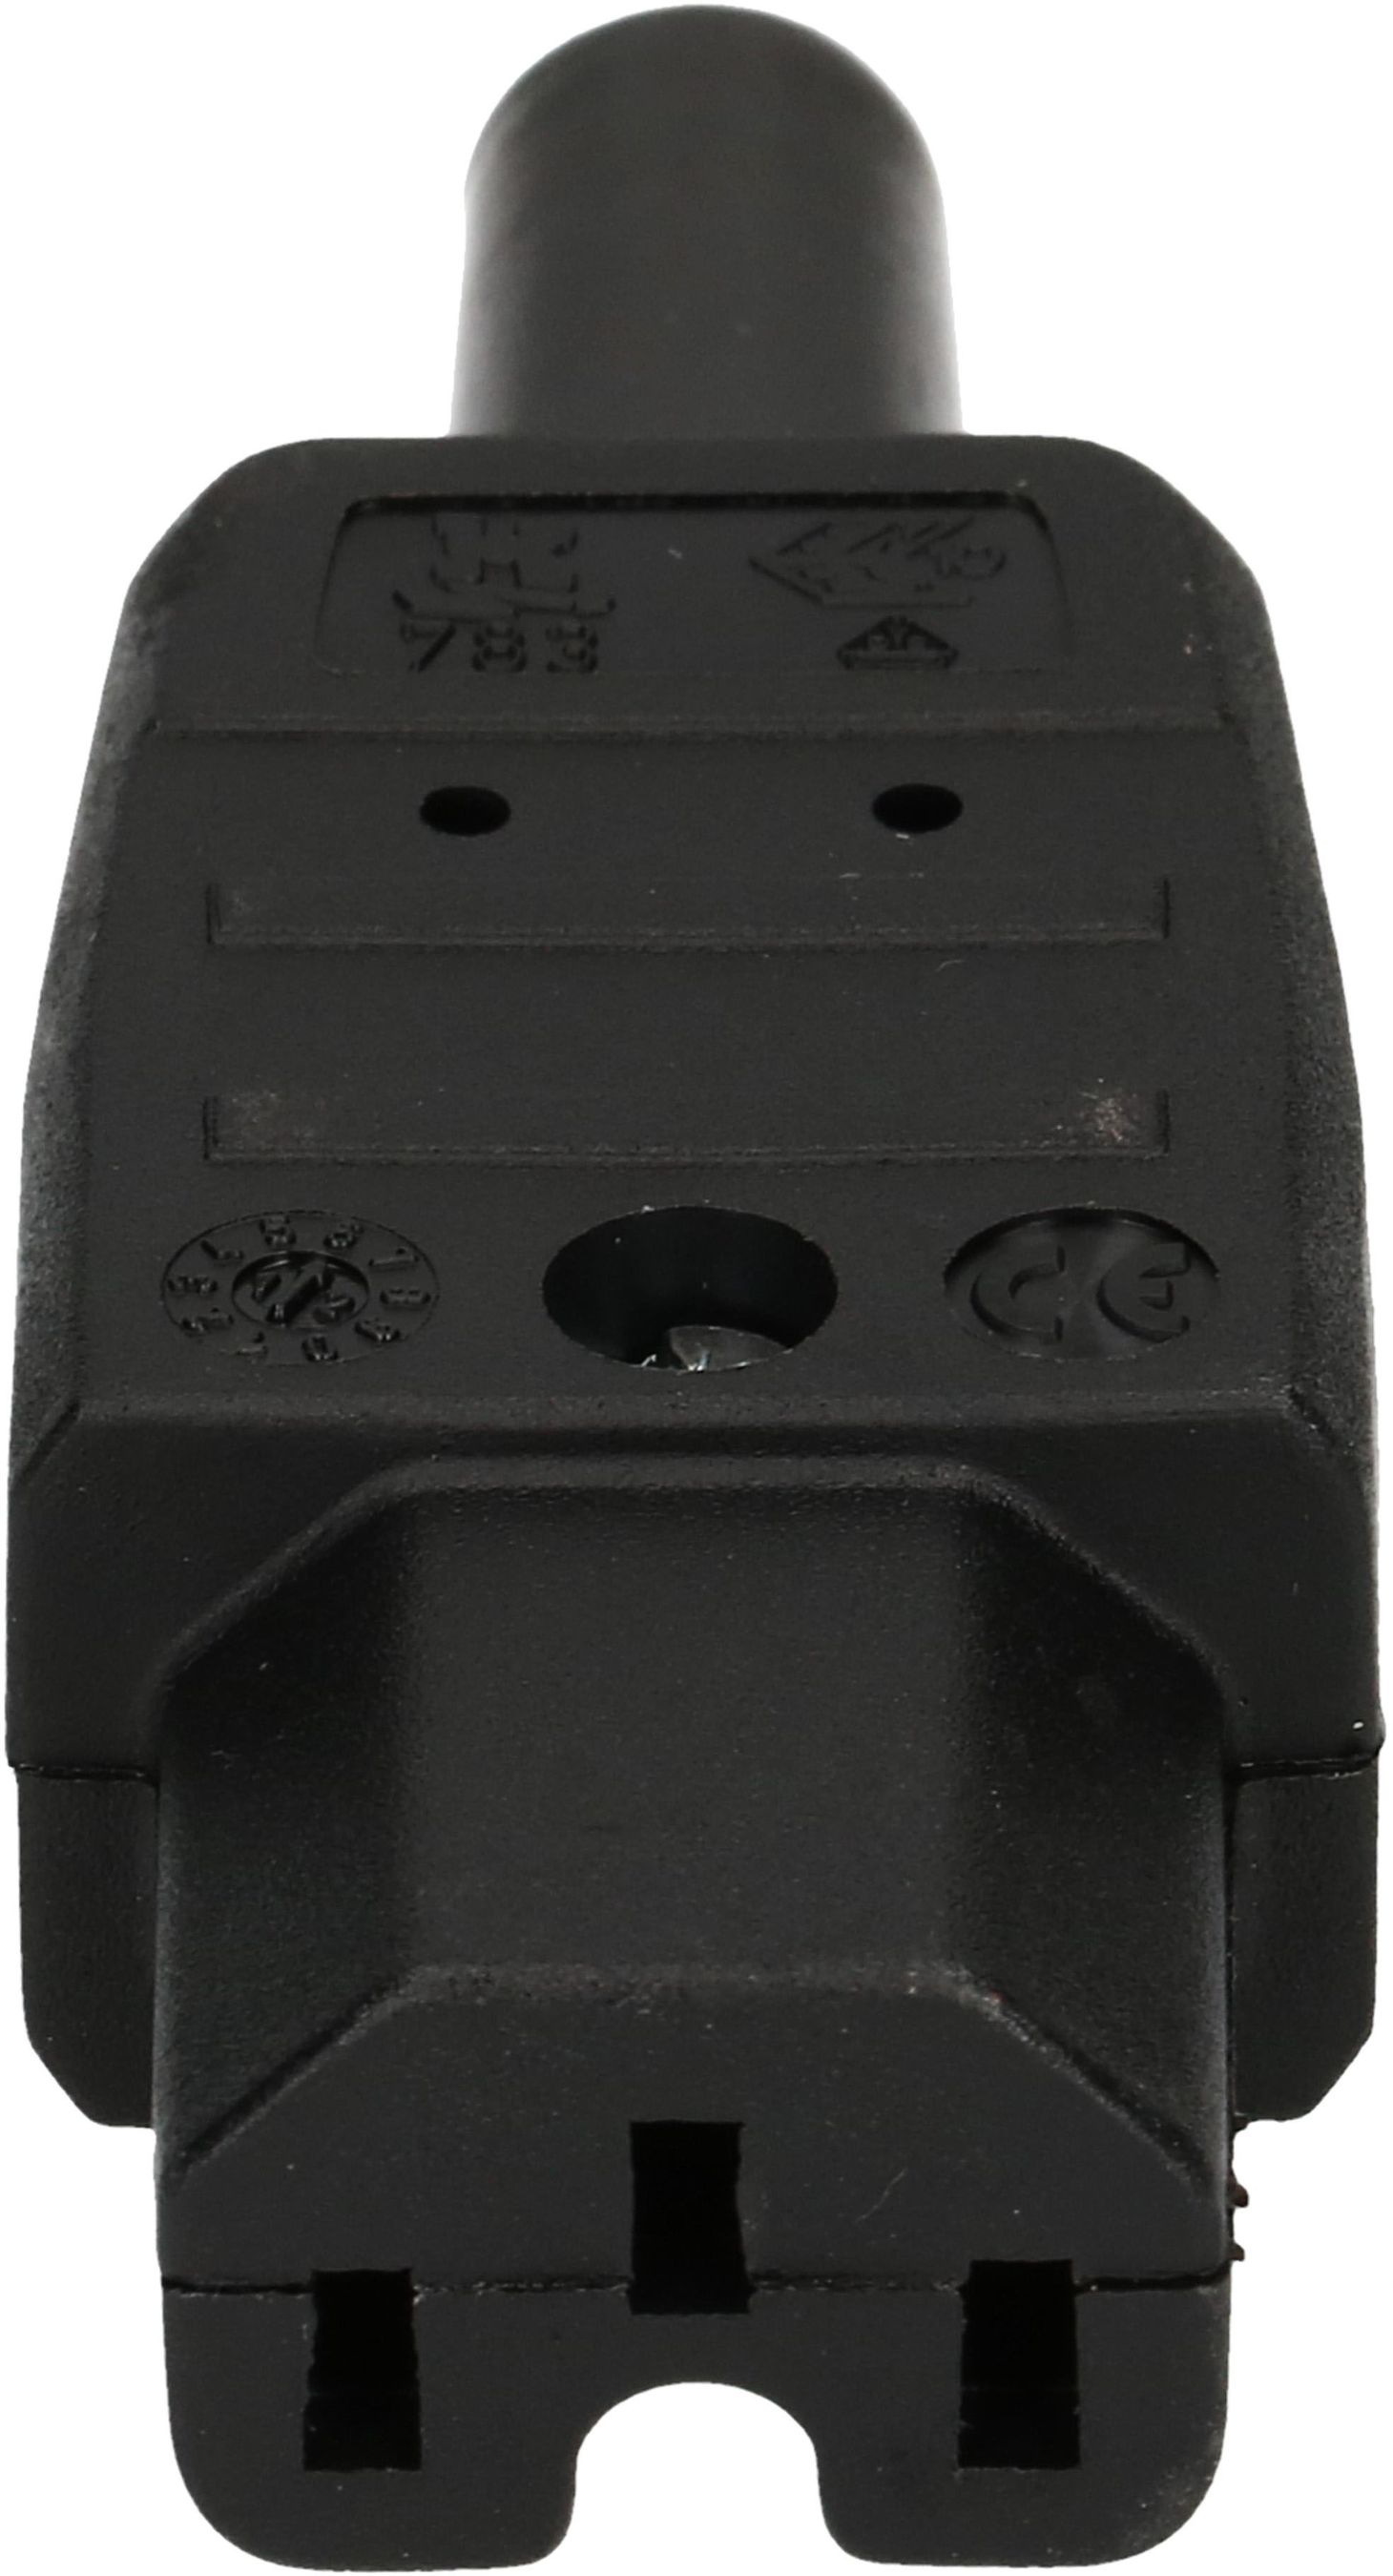 Apparatesteckdose Typ C15 3-polig schwarz